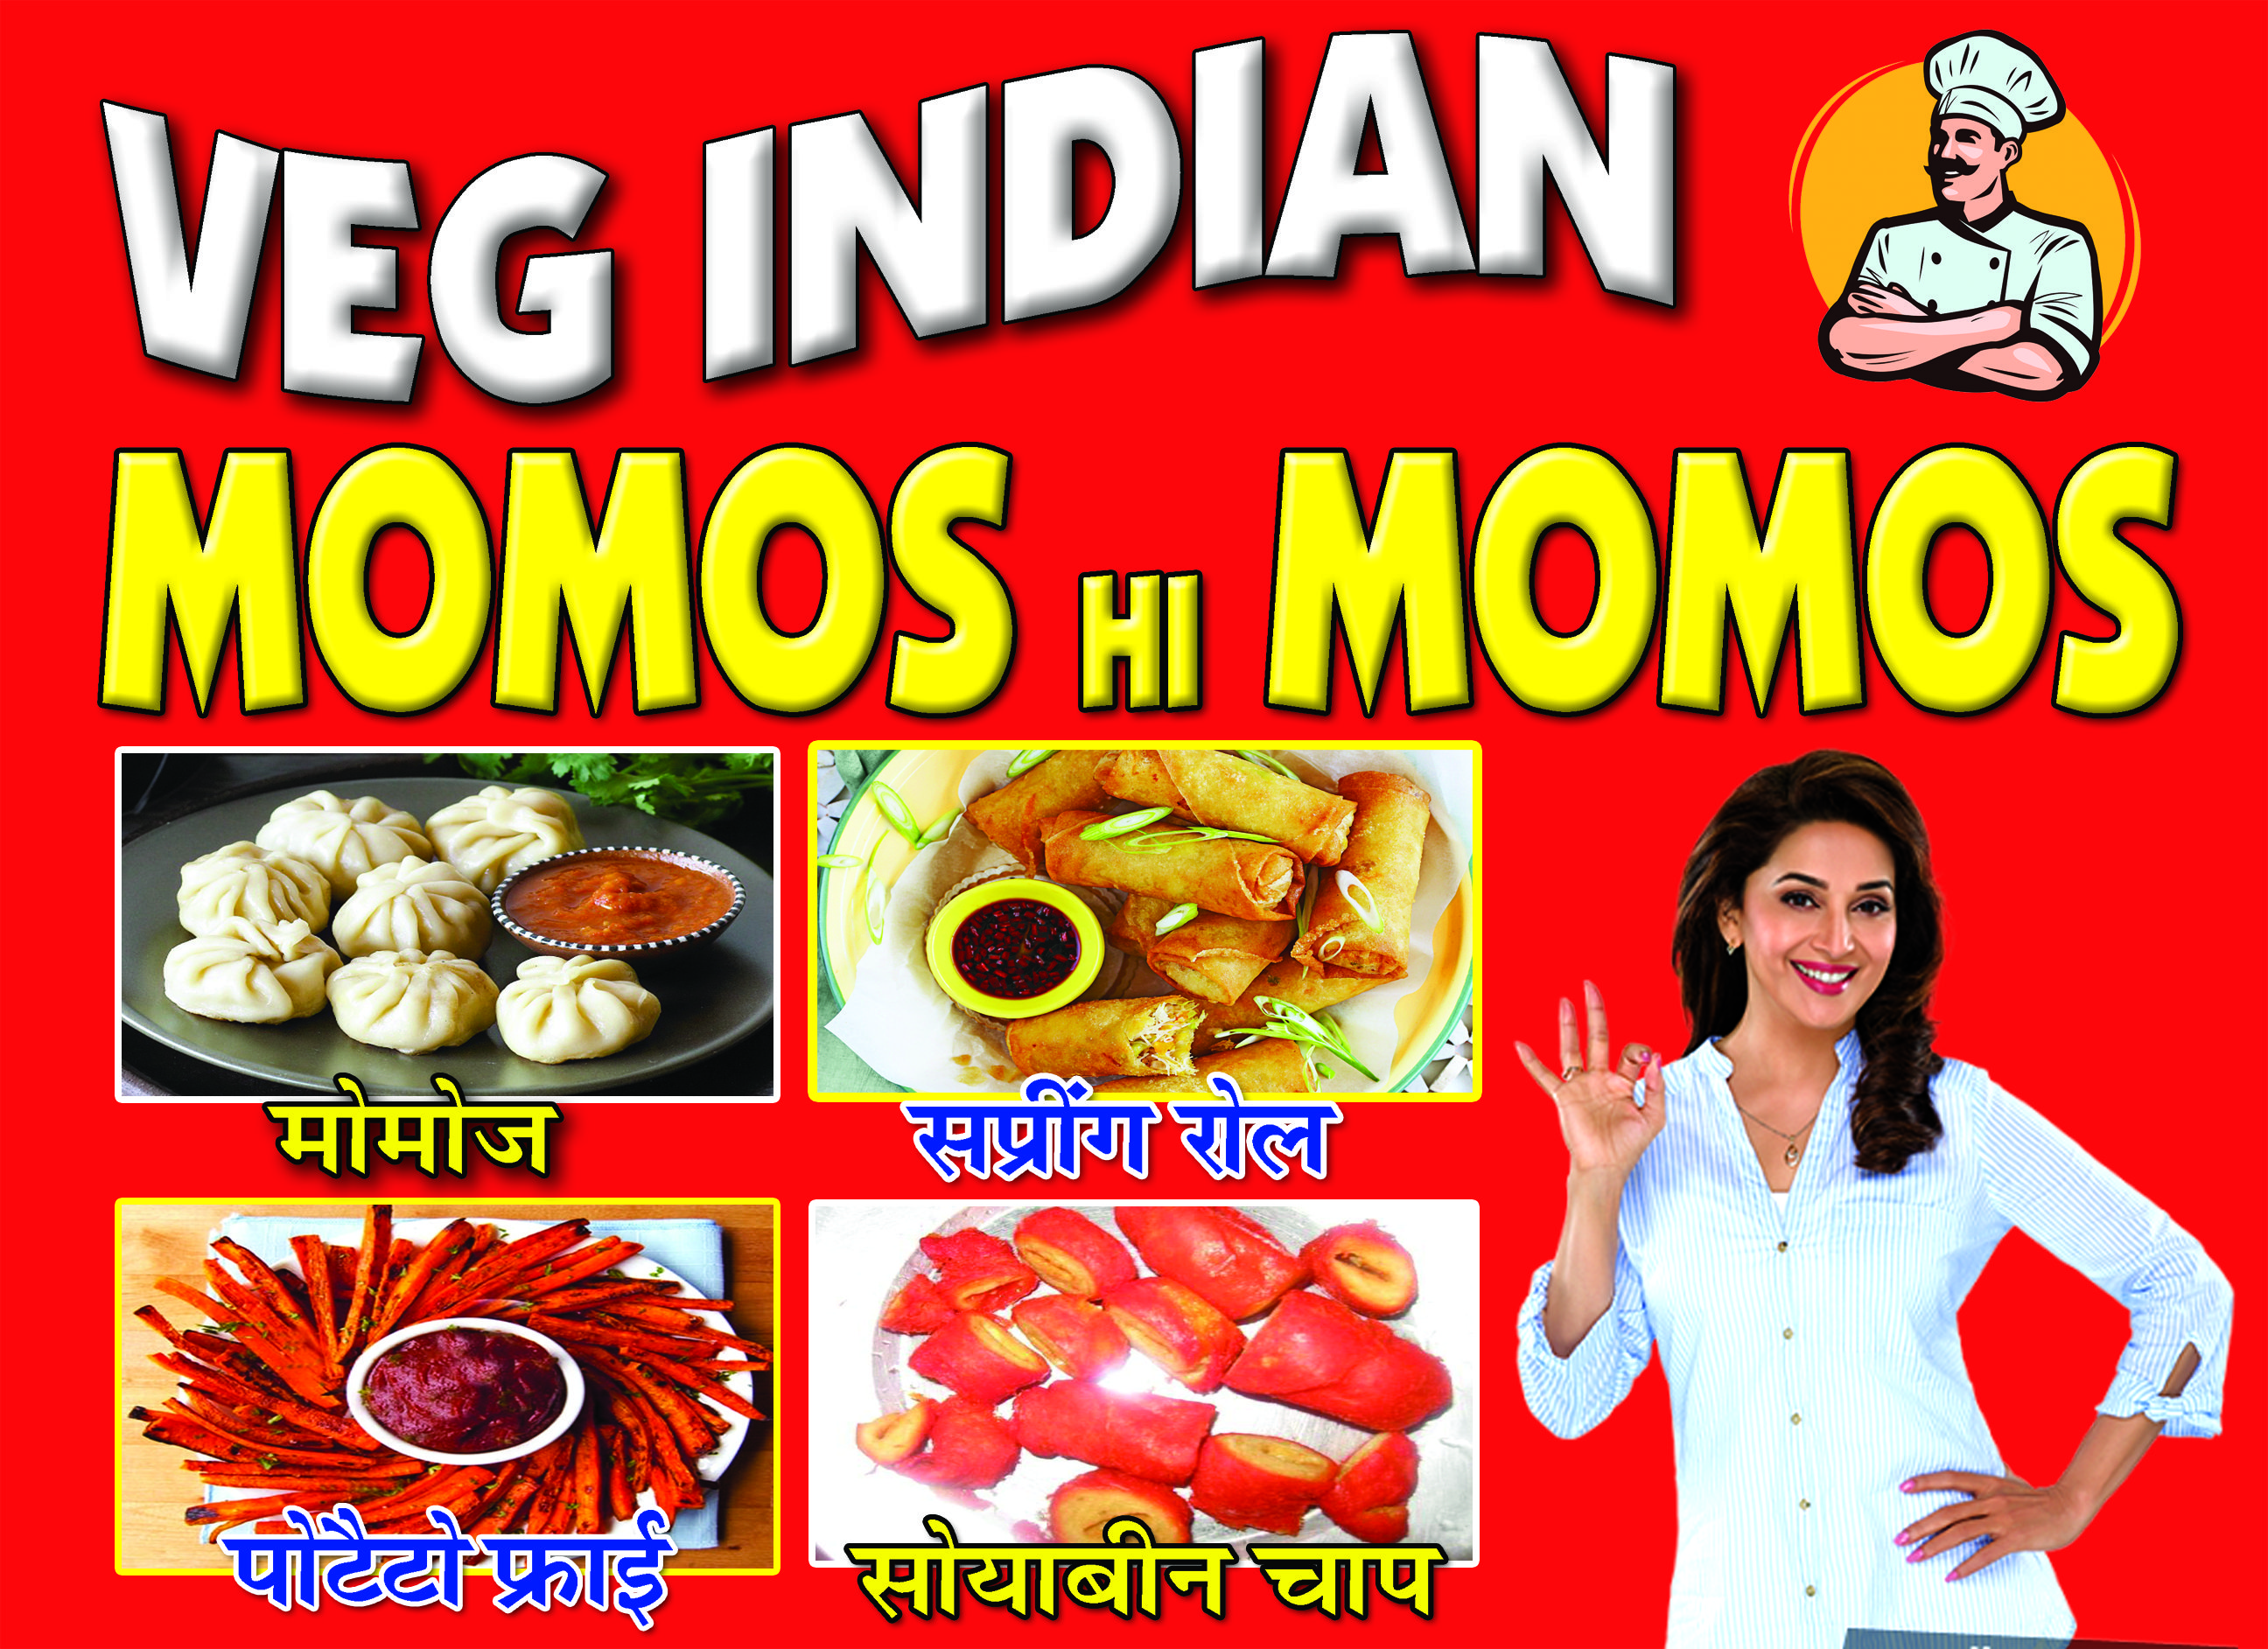 Veg Indian Momos